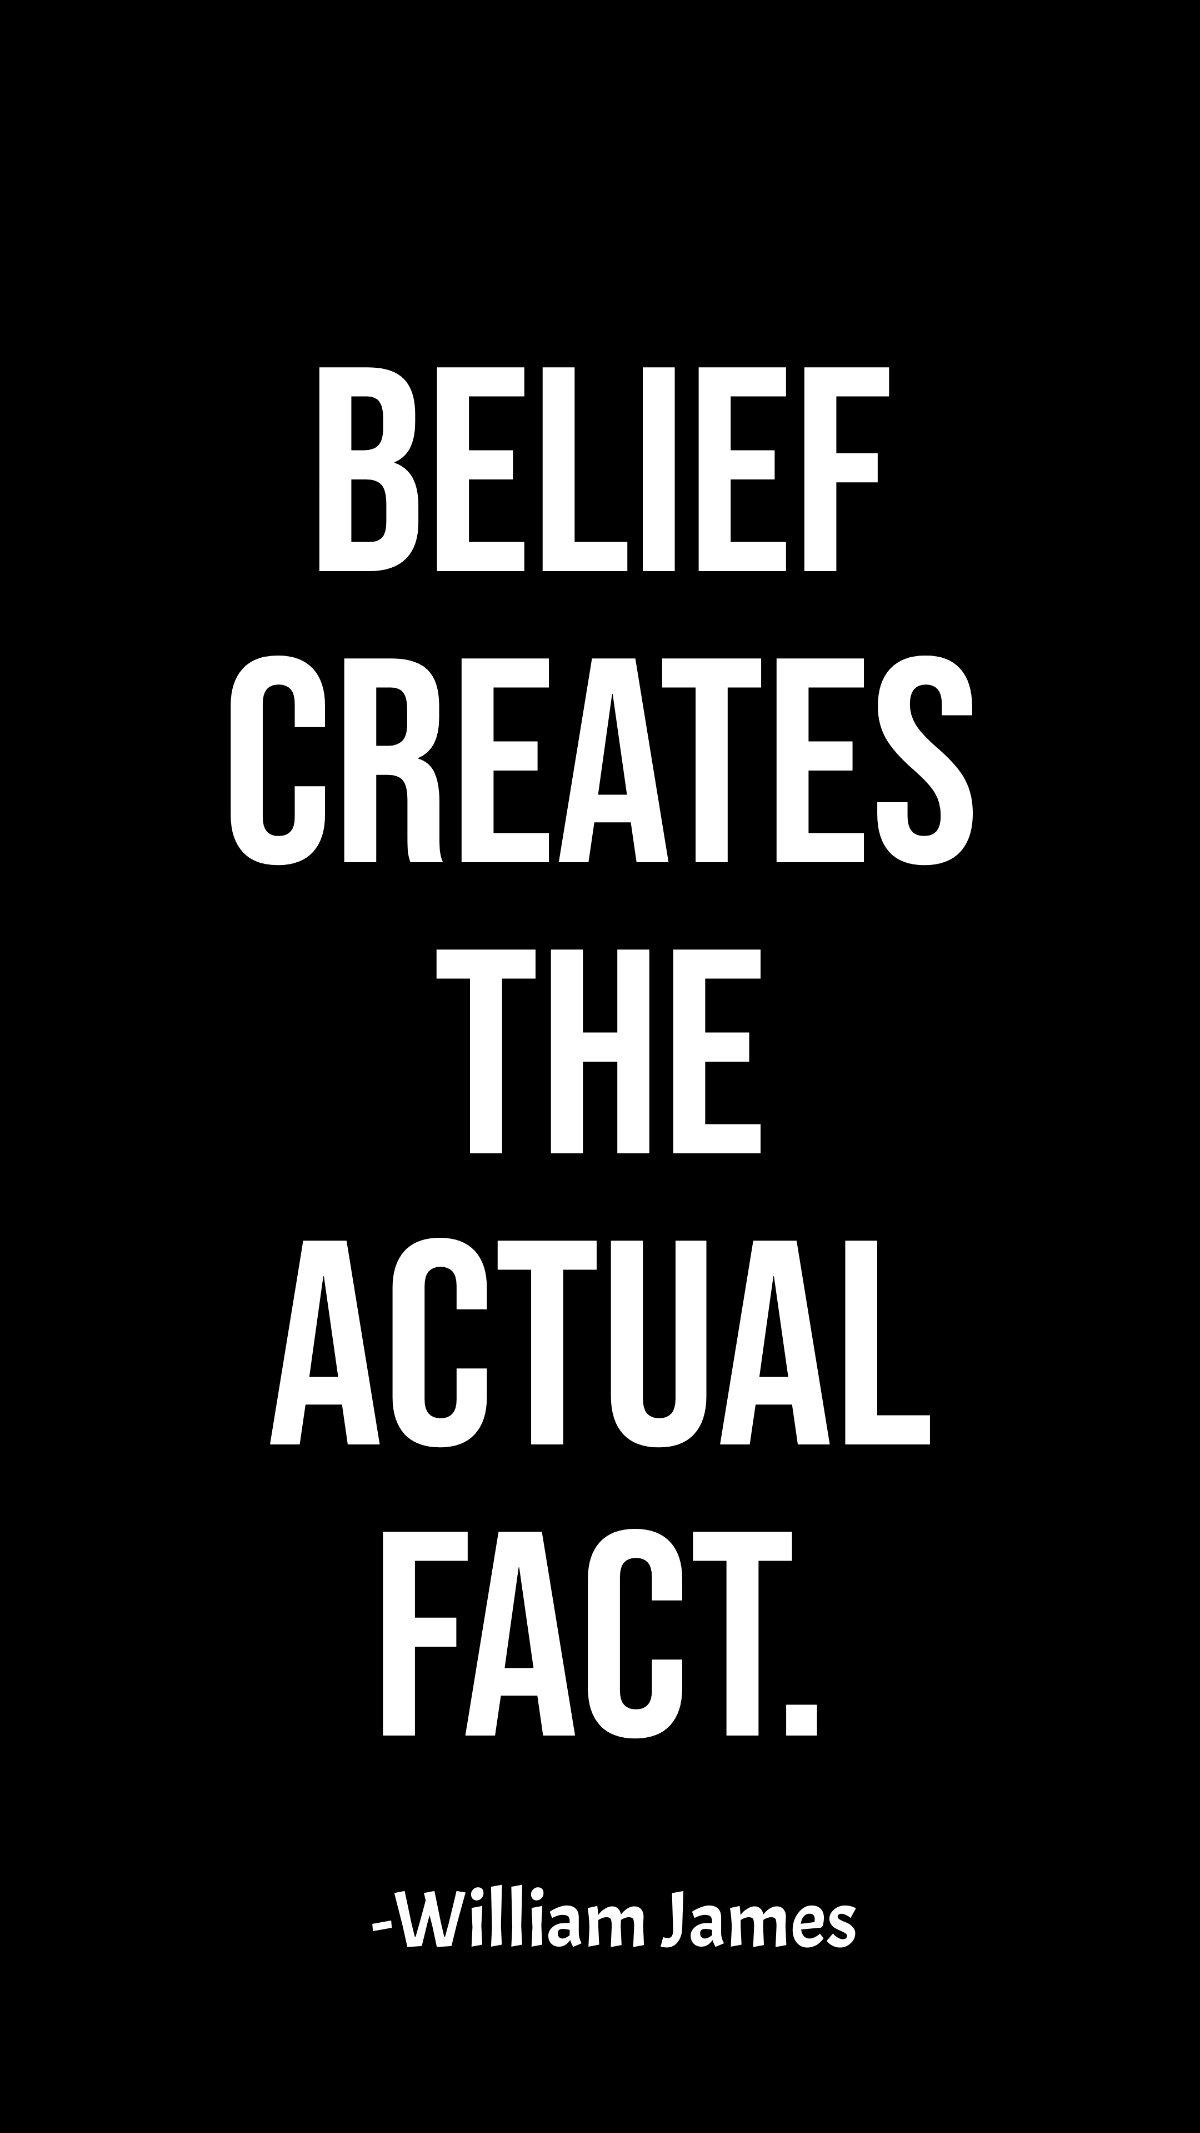 William James - Belief creates the actual fact. Template